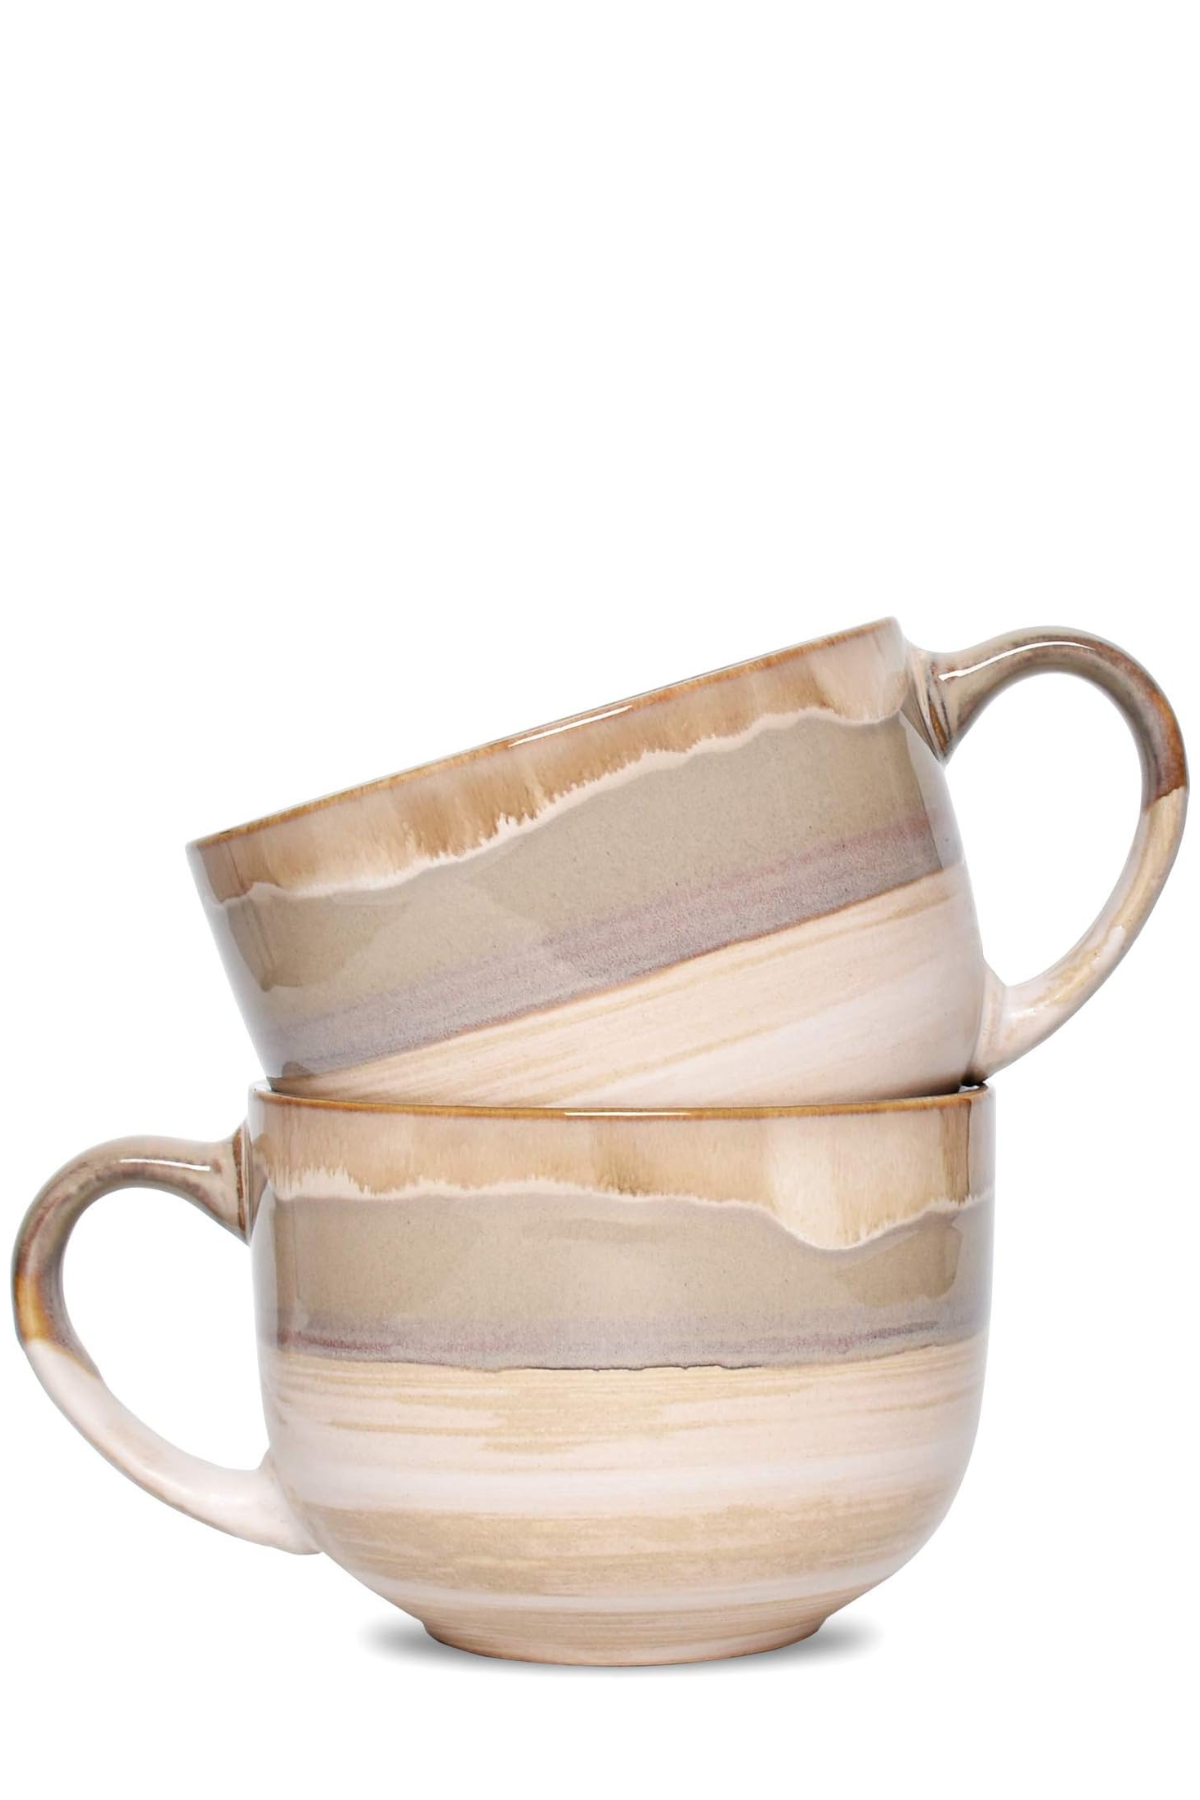 Bosmarlin Large Ceramic Coffee Mug Set of 2.png